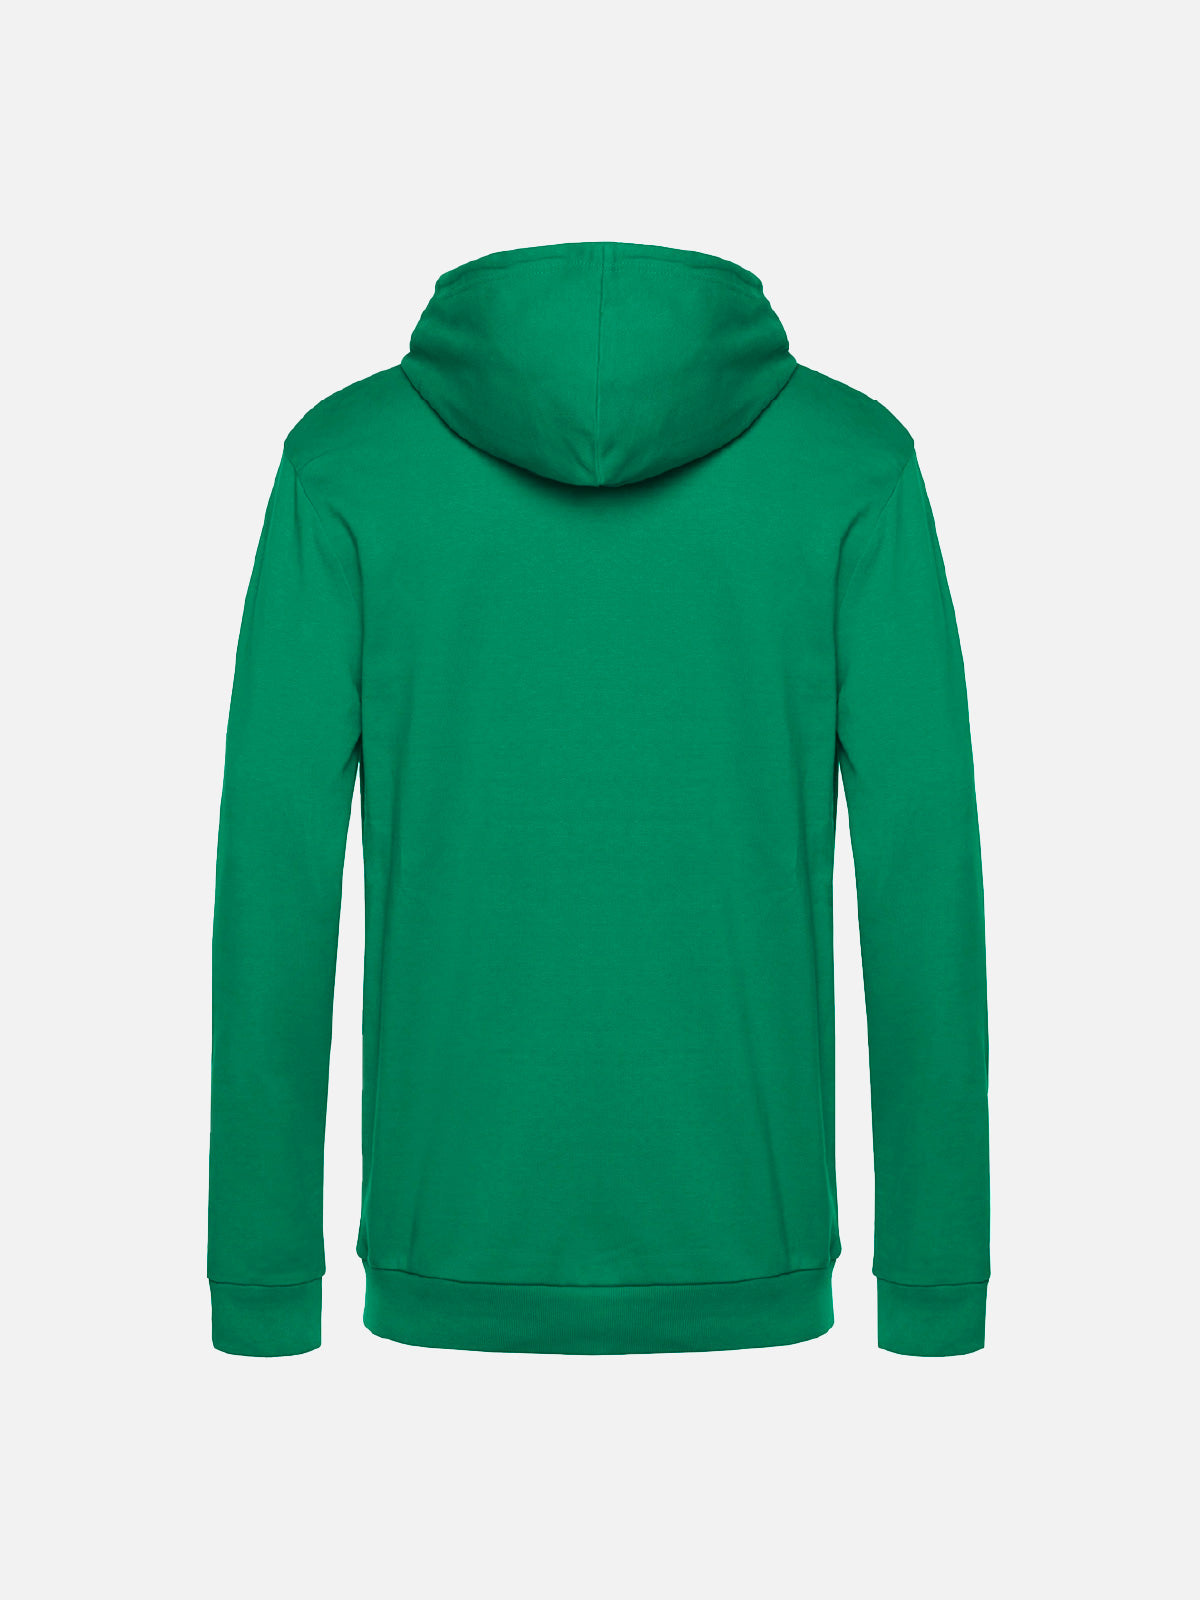 Men's Mid Season Hooded Sweatshirt - Kelly Green